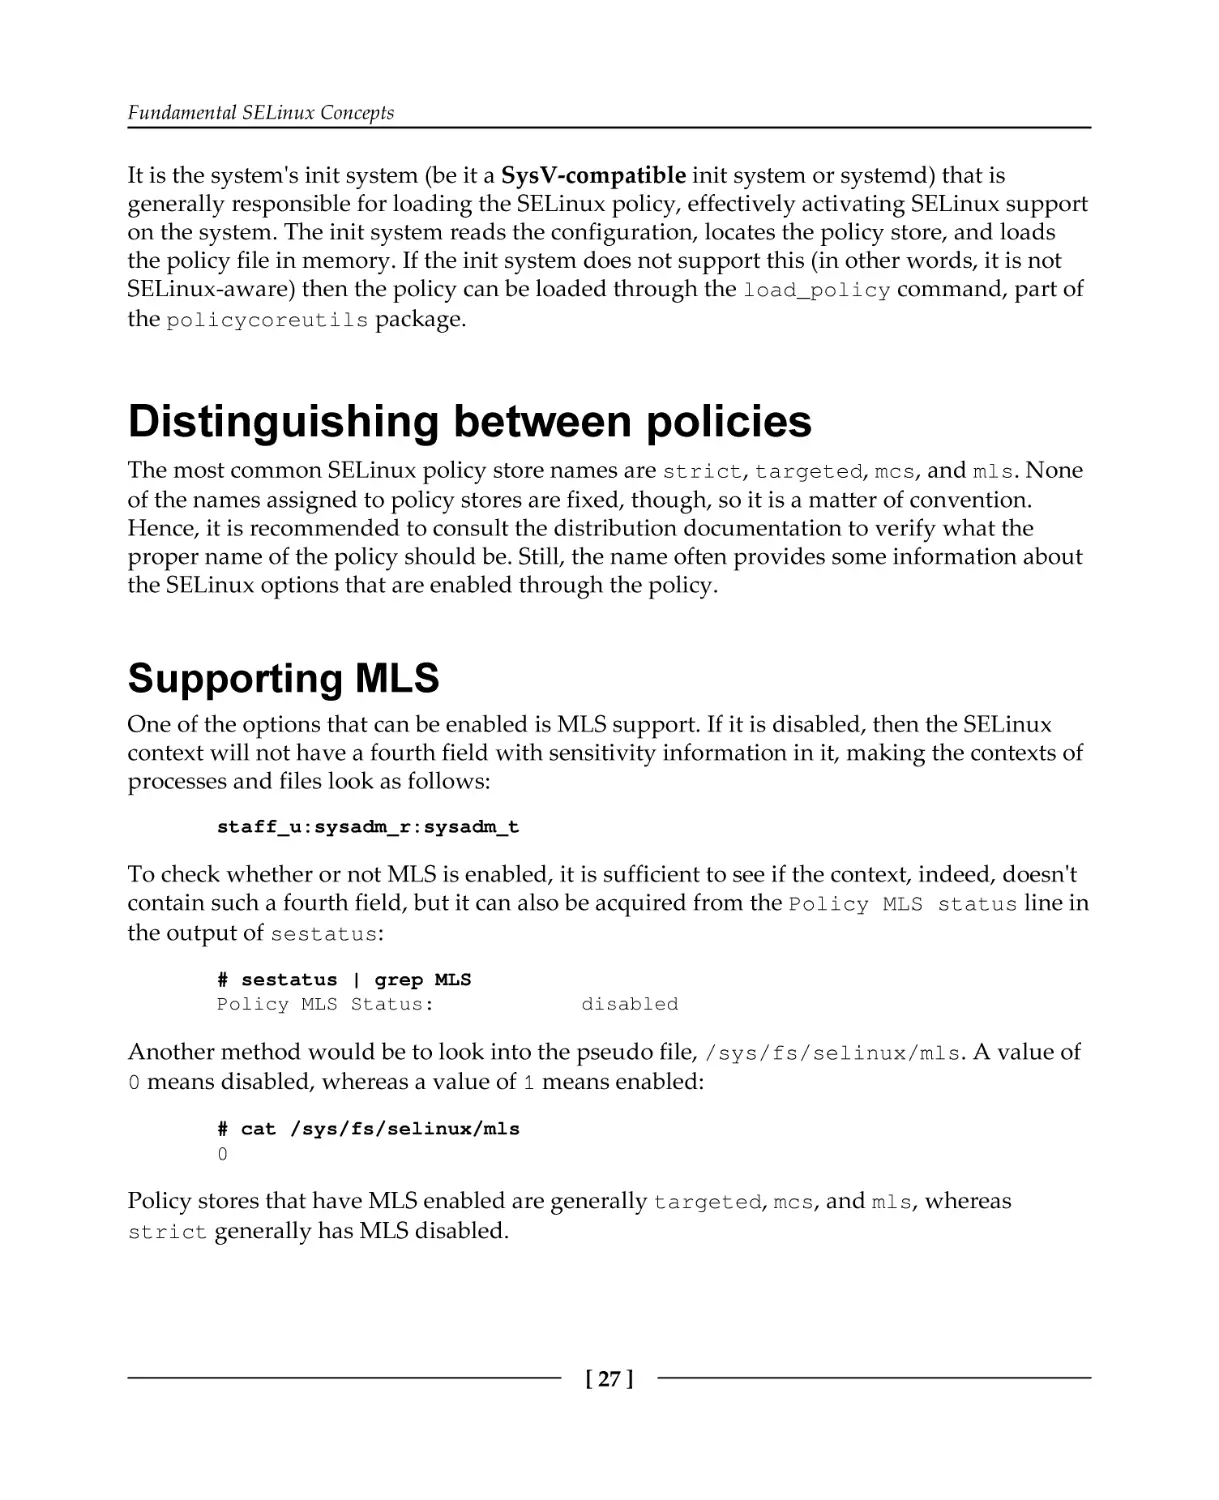 Distinguishing between policies
Supporting MLS